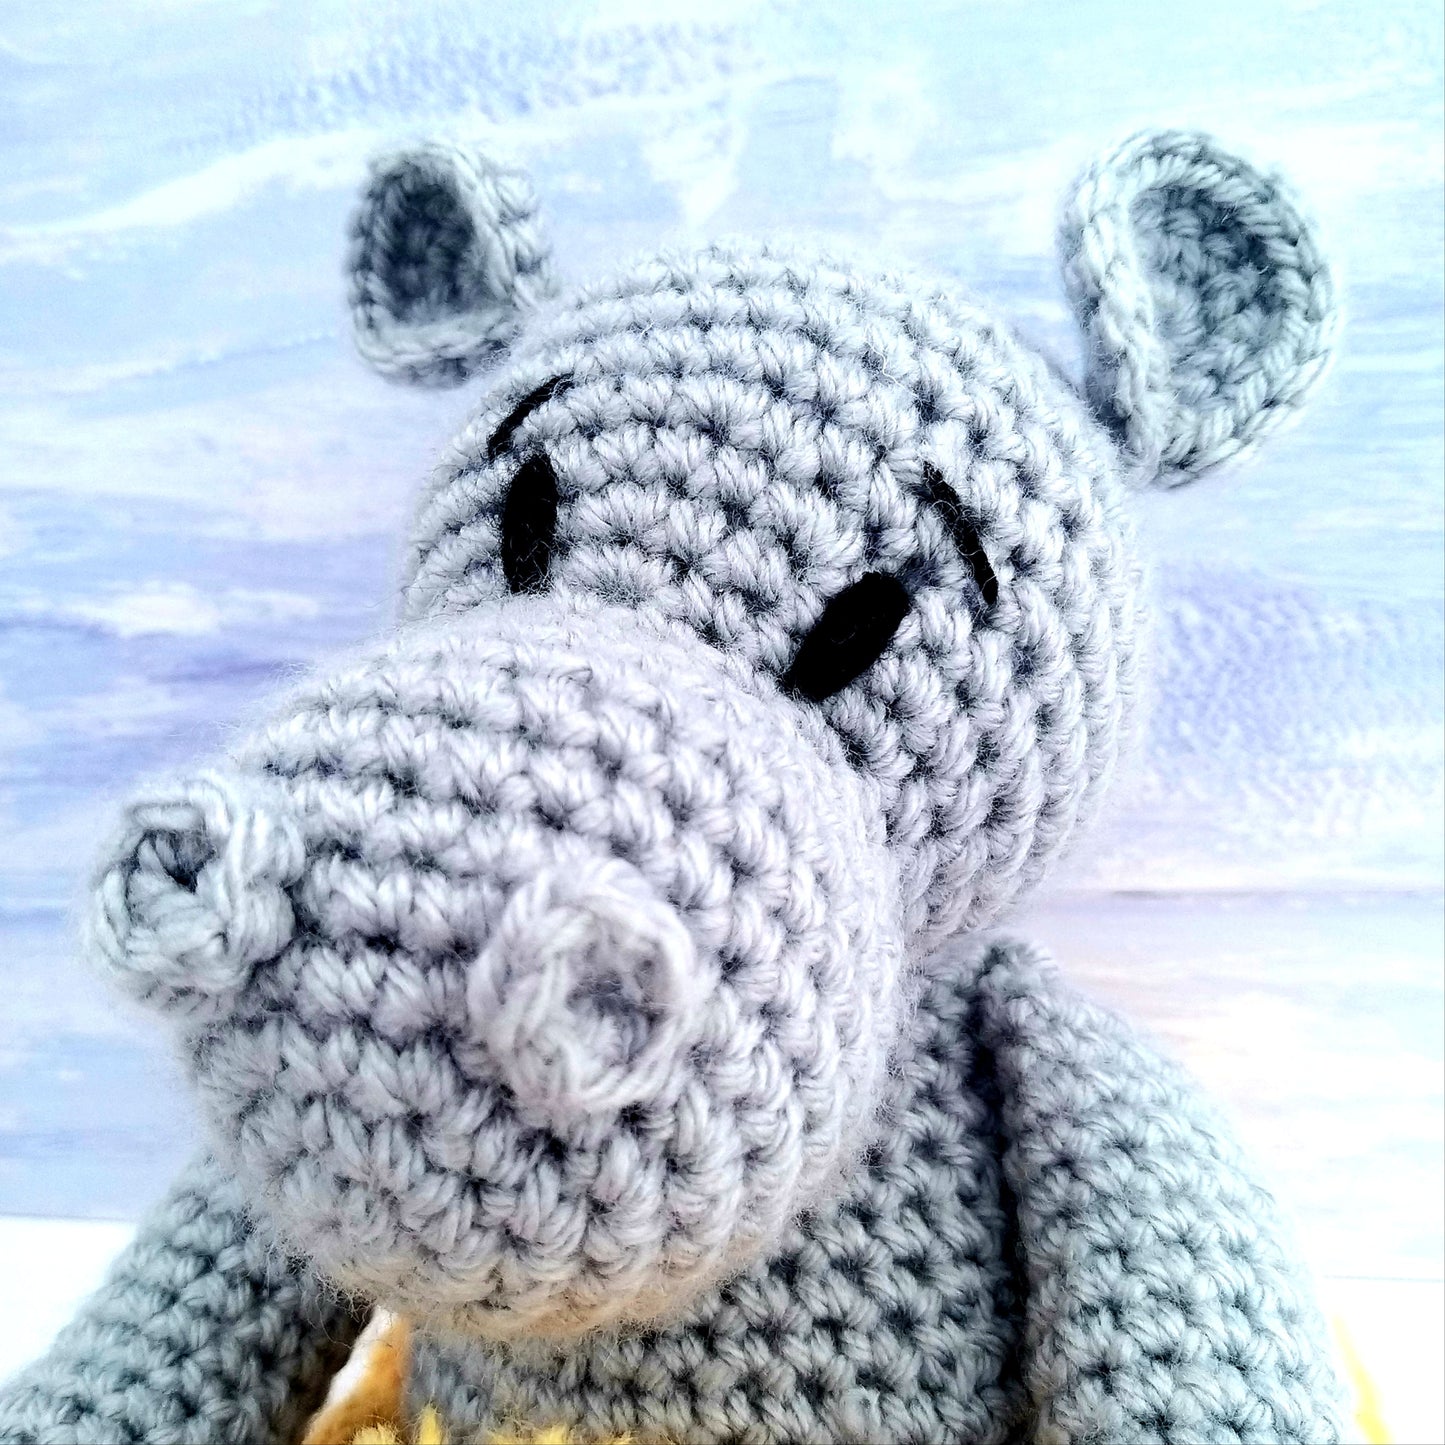 Henry or Henrietta the Hippo Luxury Crochet Kit